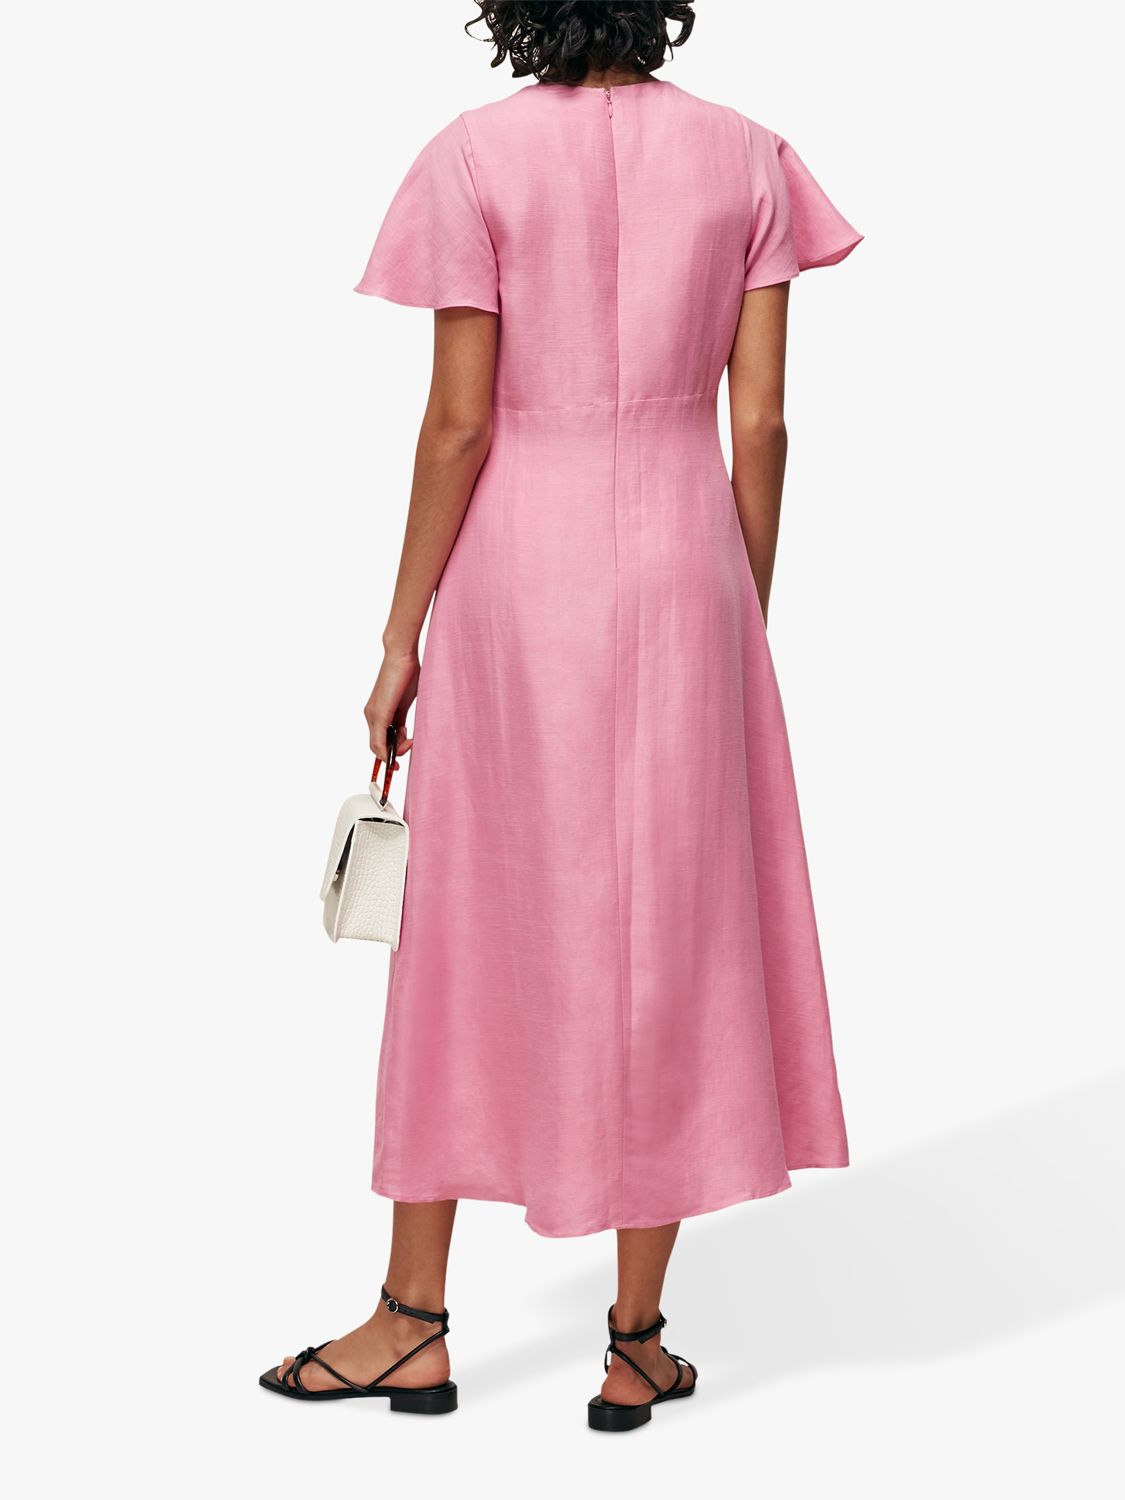 Whistles Frill Sleeve Midi Dress, Pink at John Lewis & Partners